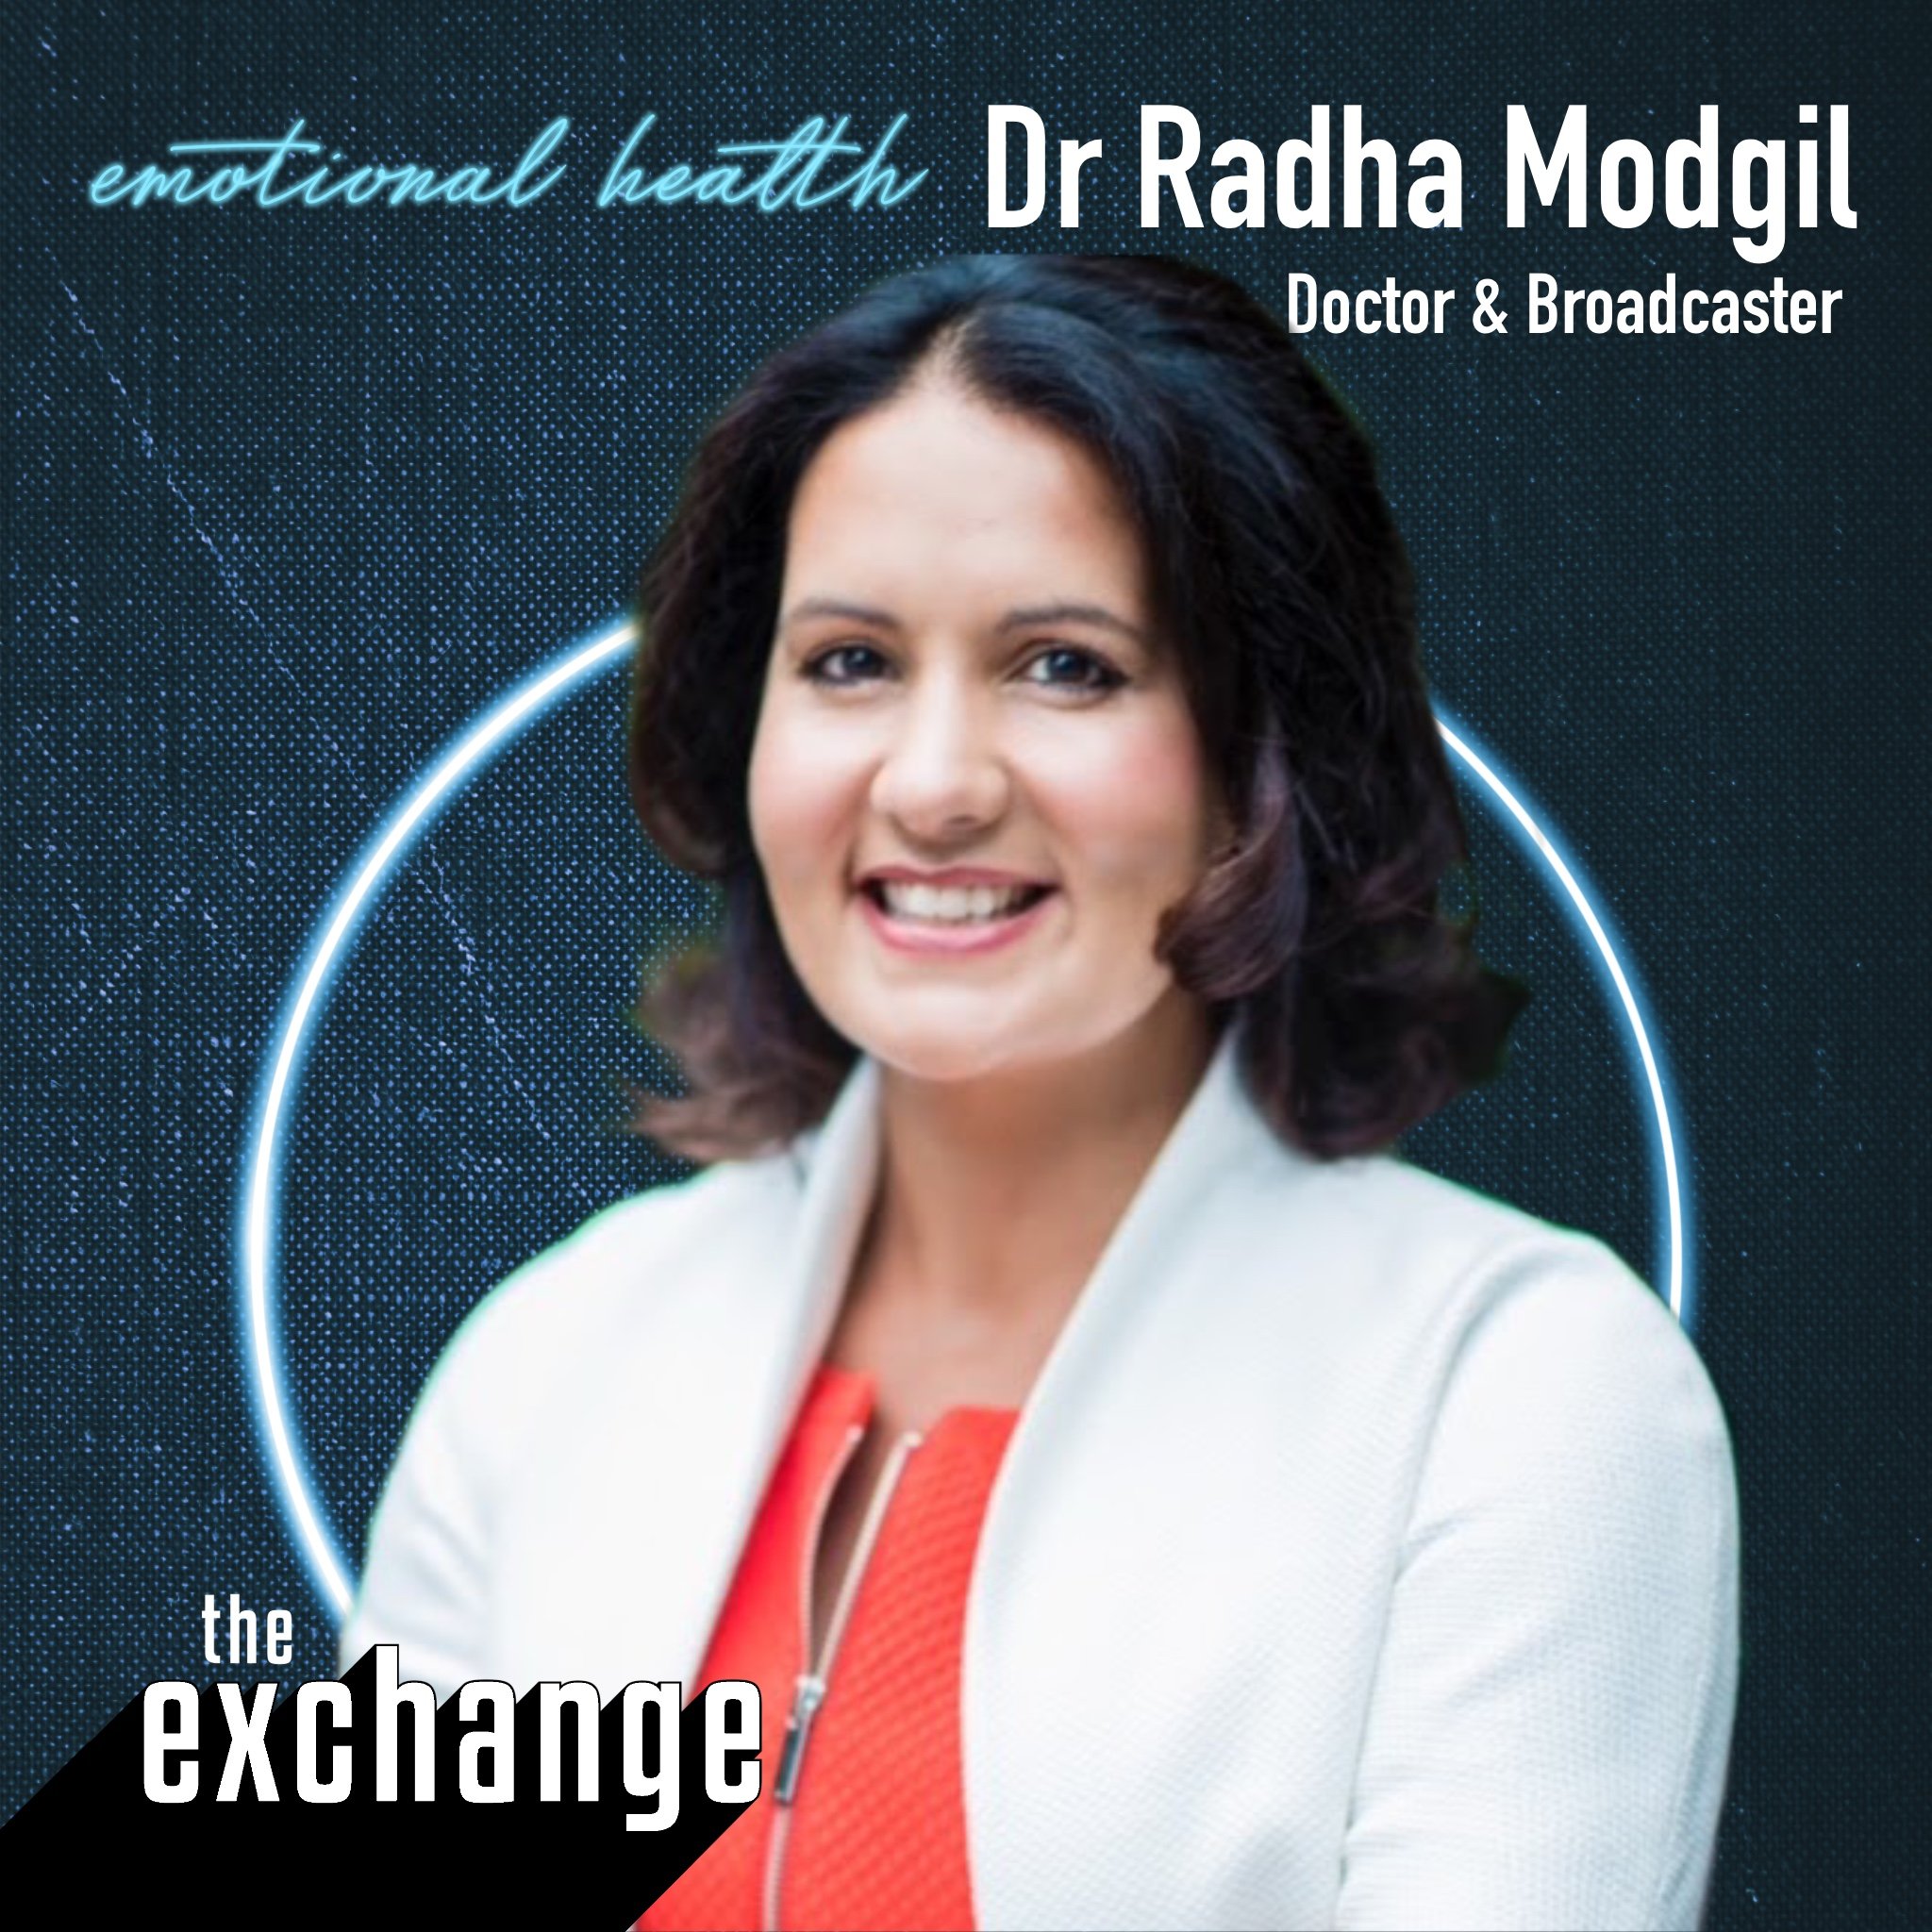 Dr Radha Modgil on anger